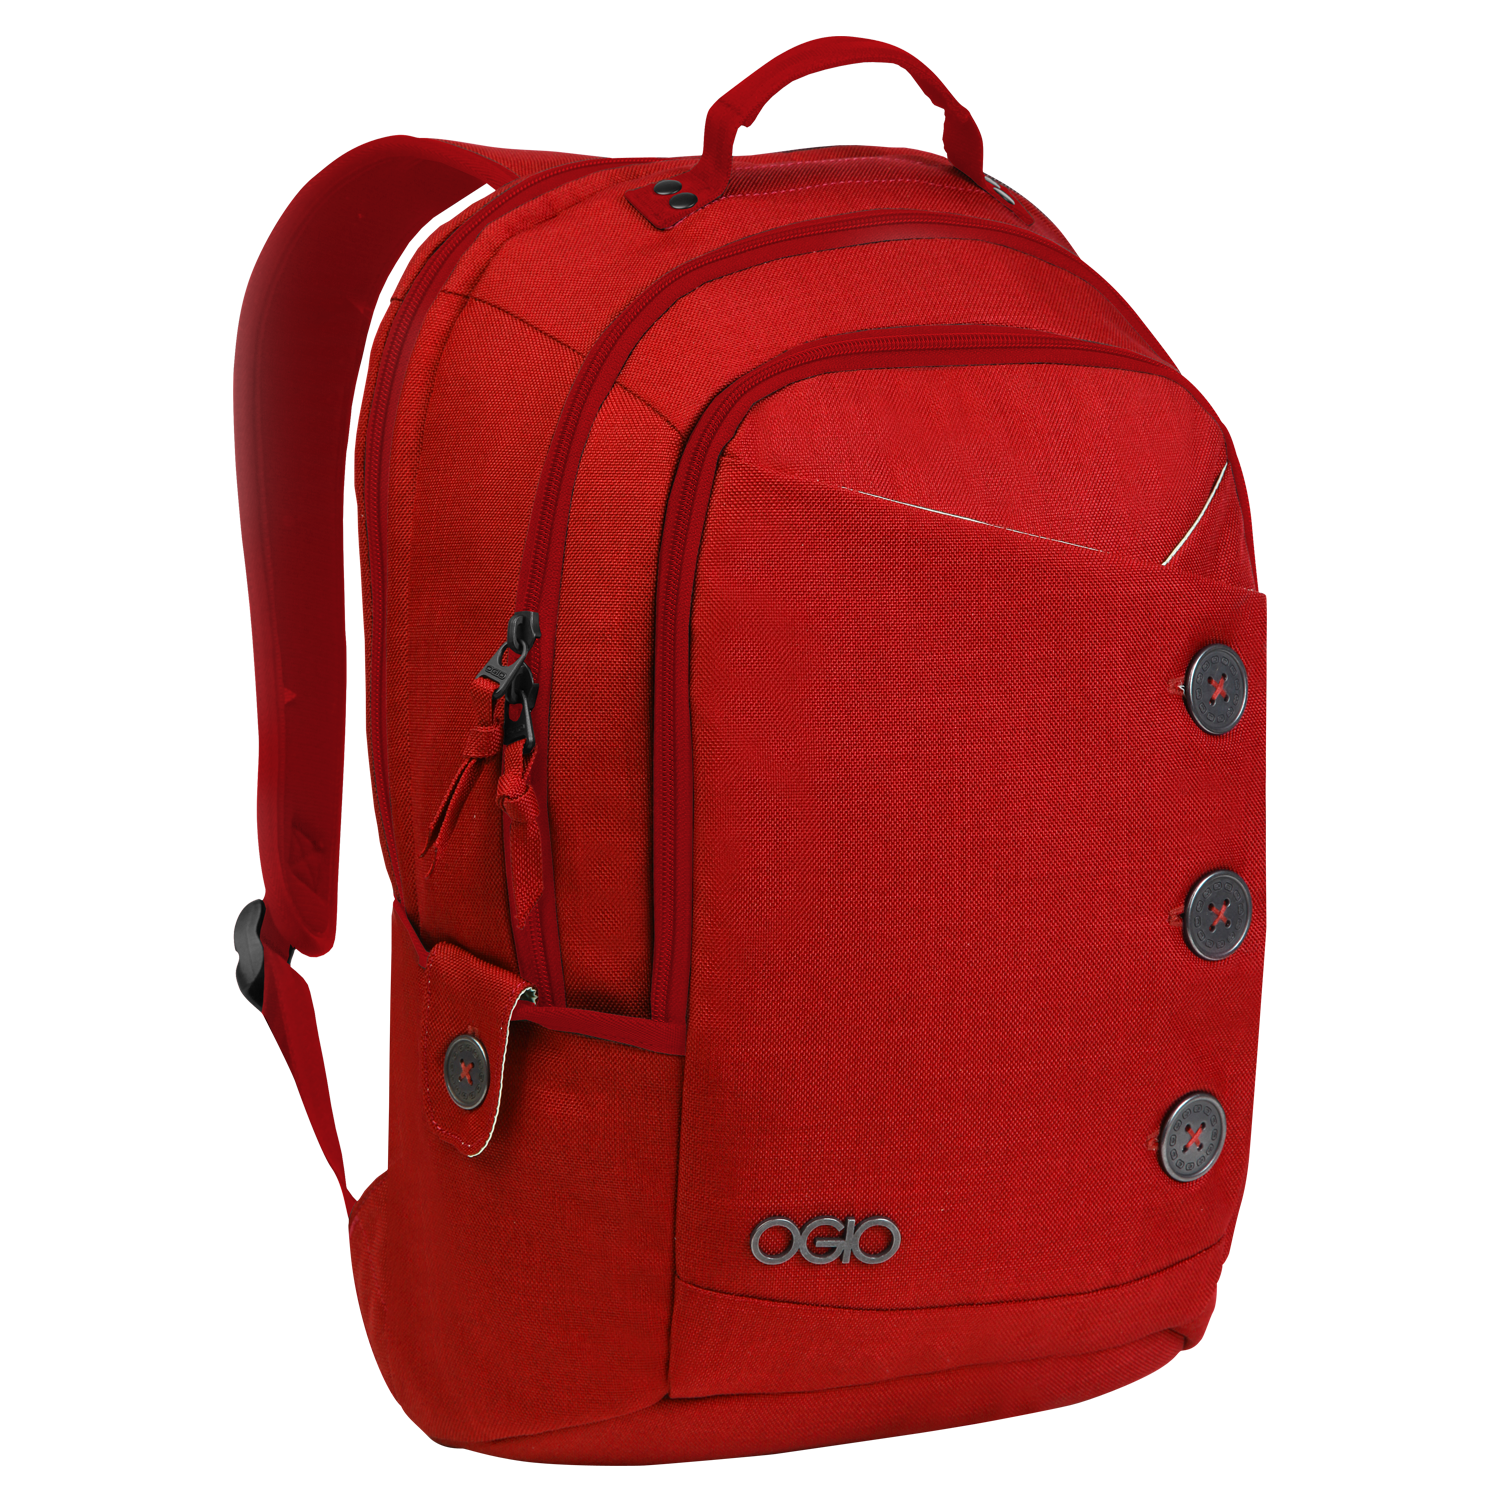 Red Bag Transparent PNG